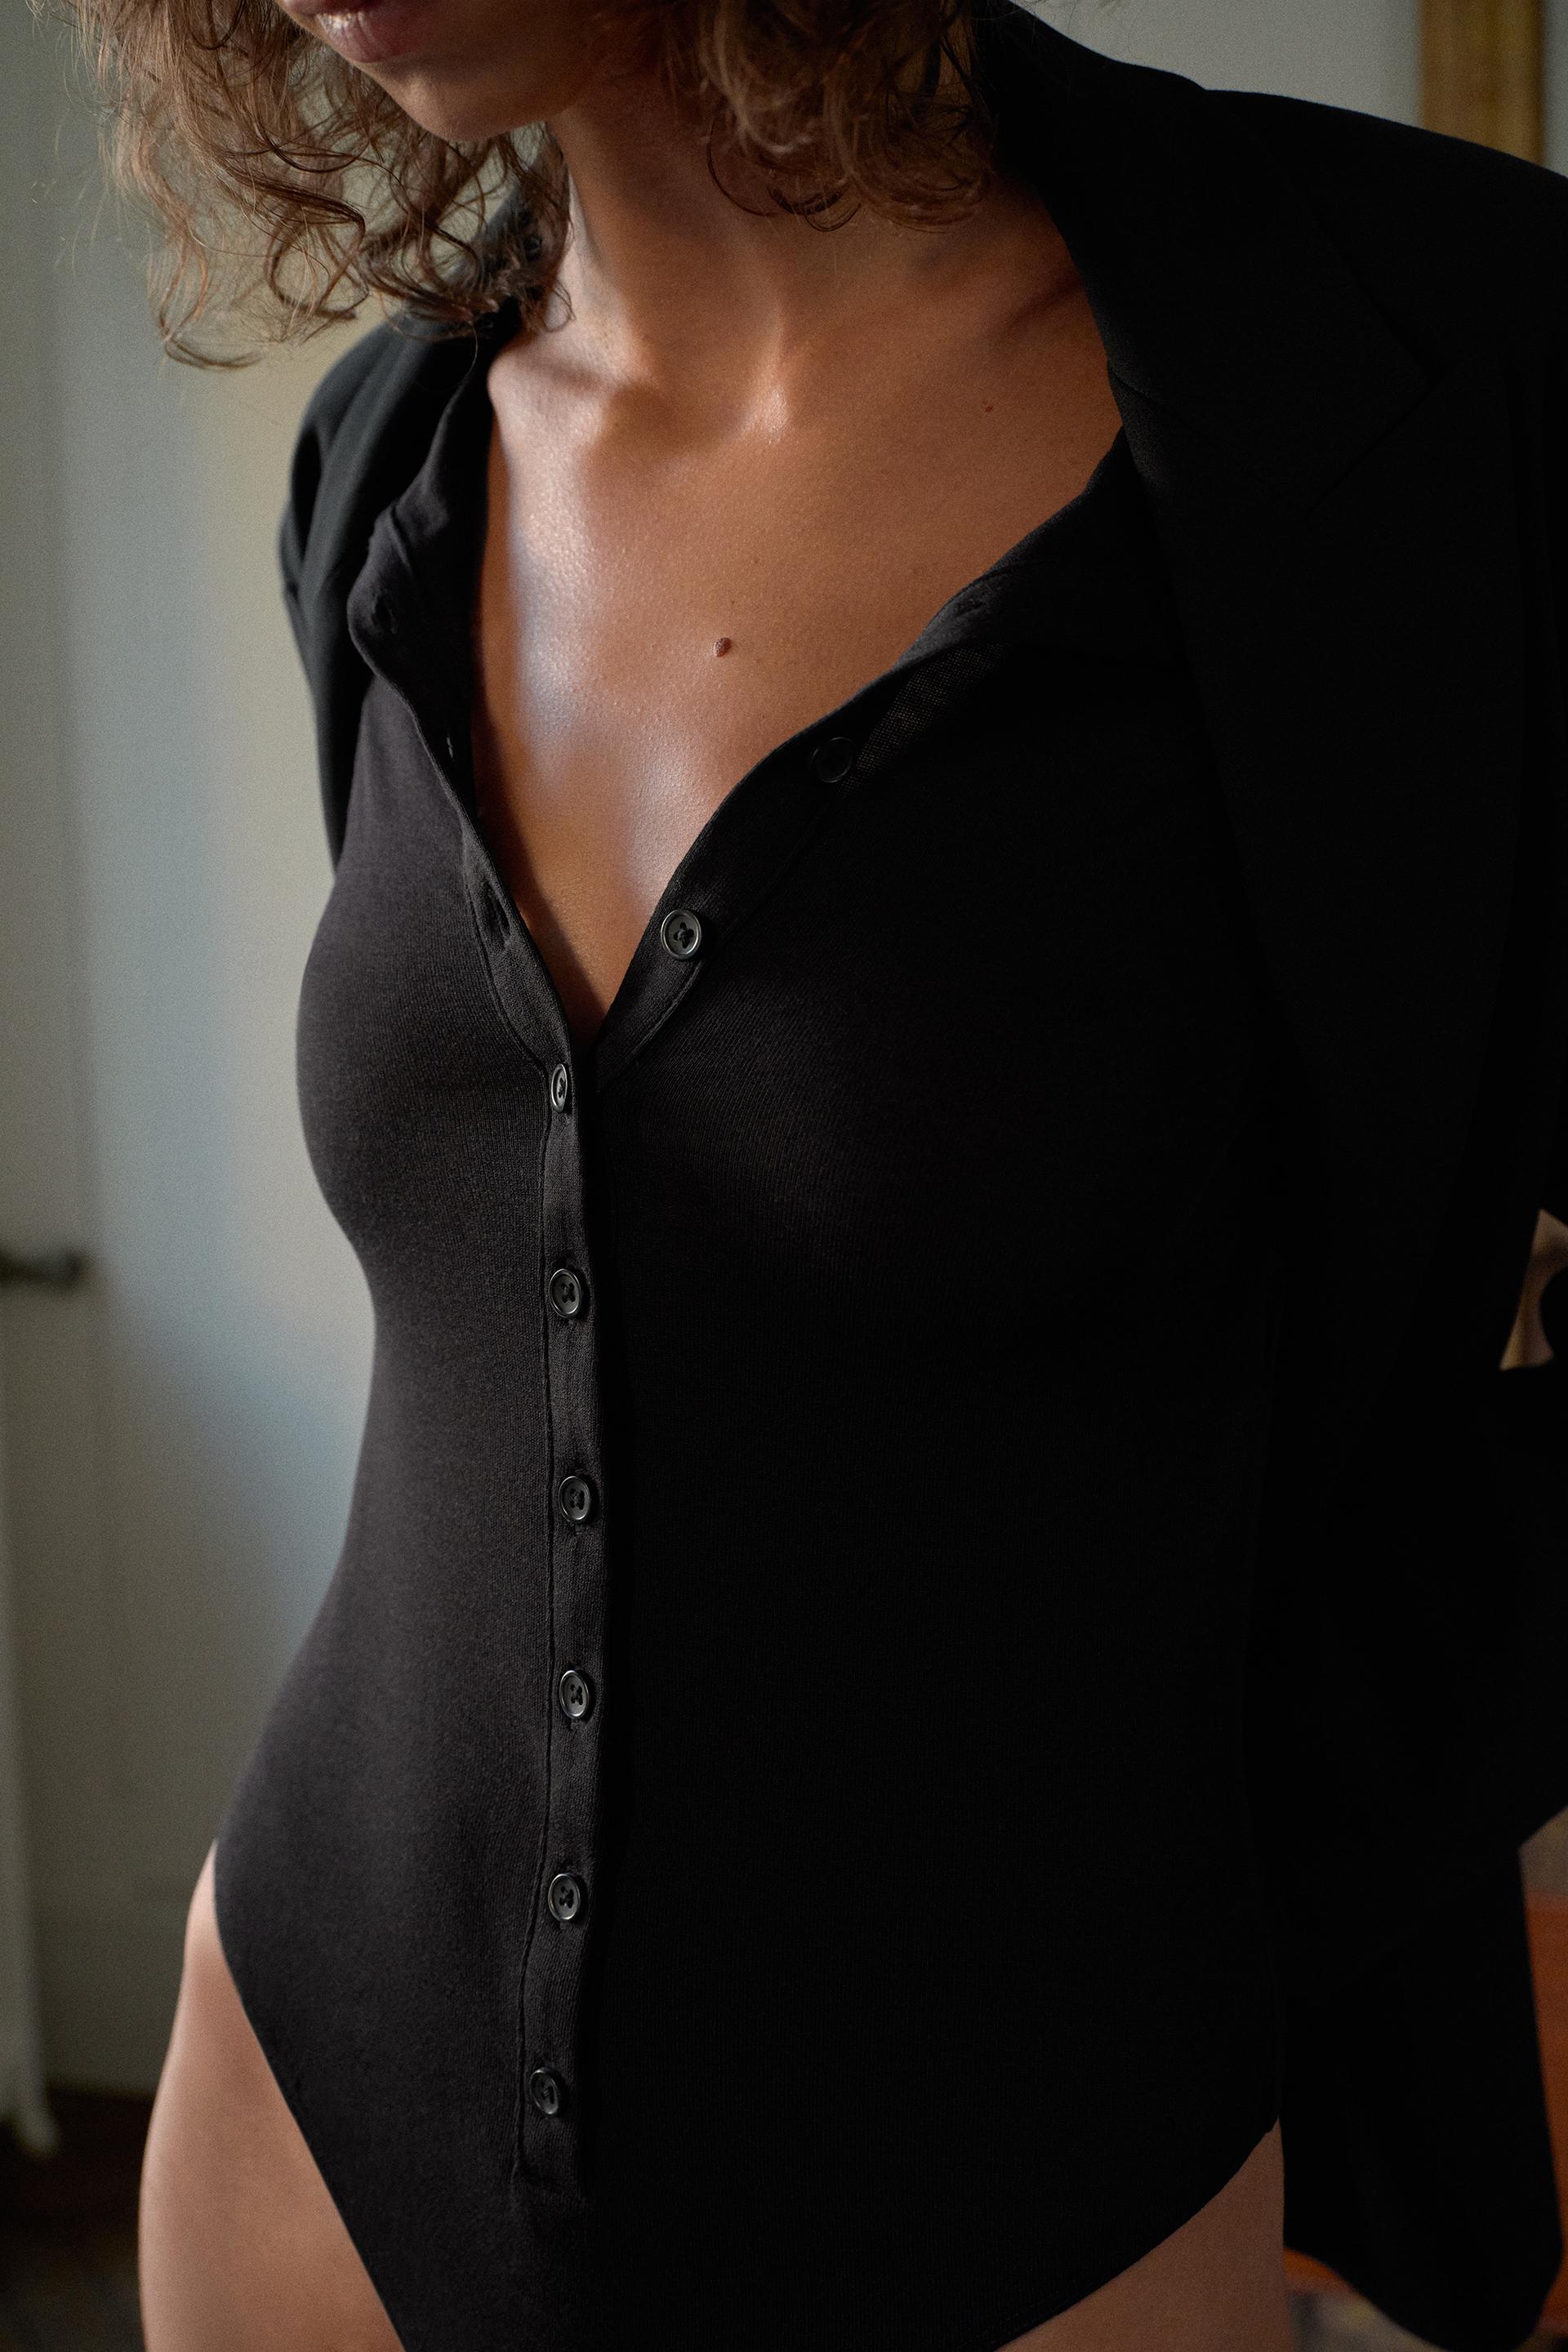 Zara Trafaluc Black Lace Bodysuit V-Neck One-Piece Medium Sheer